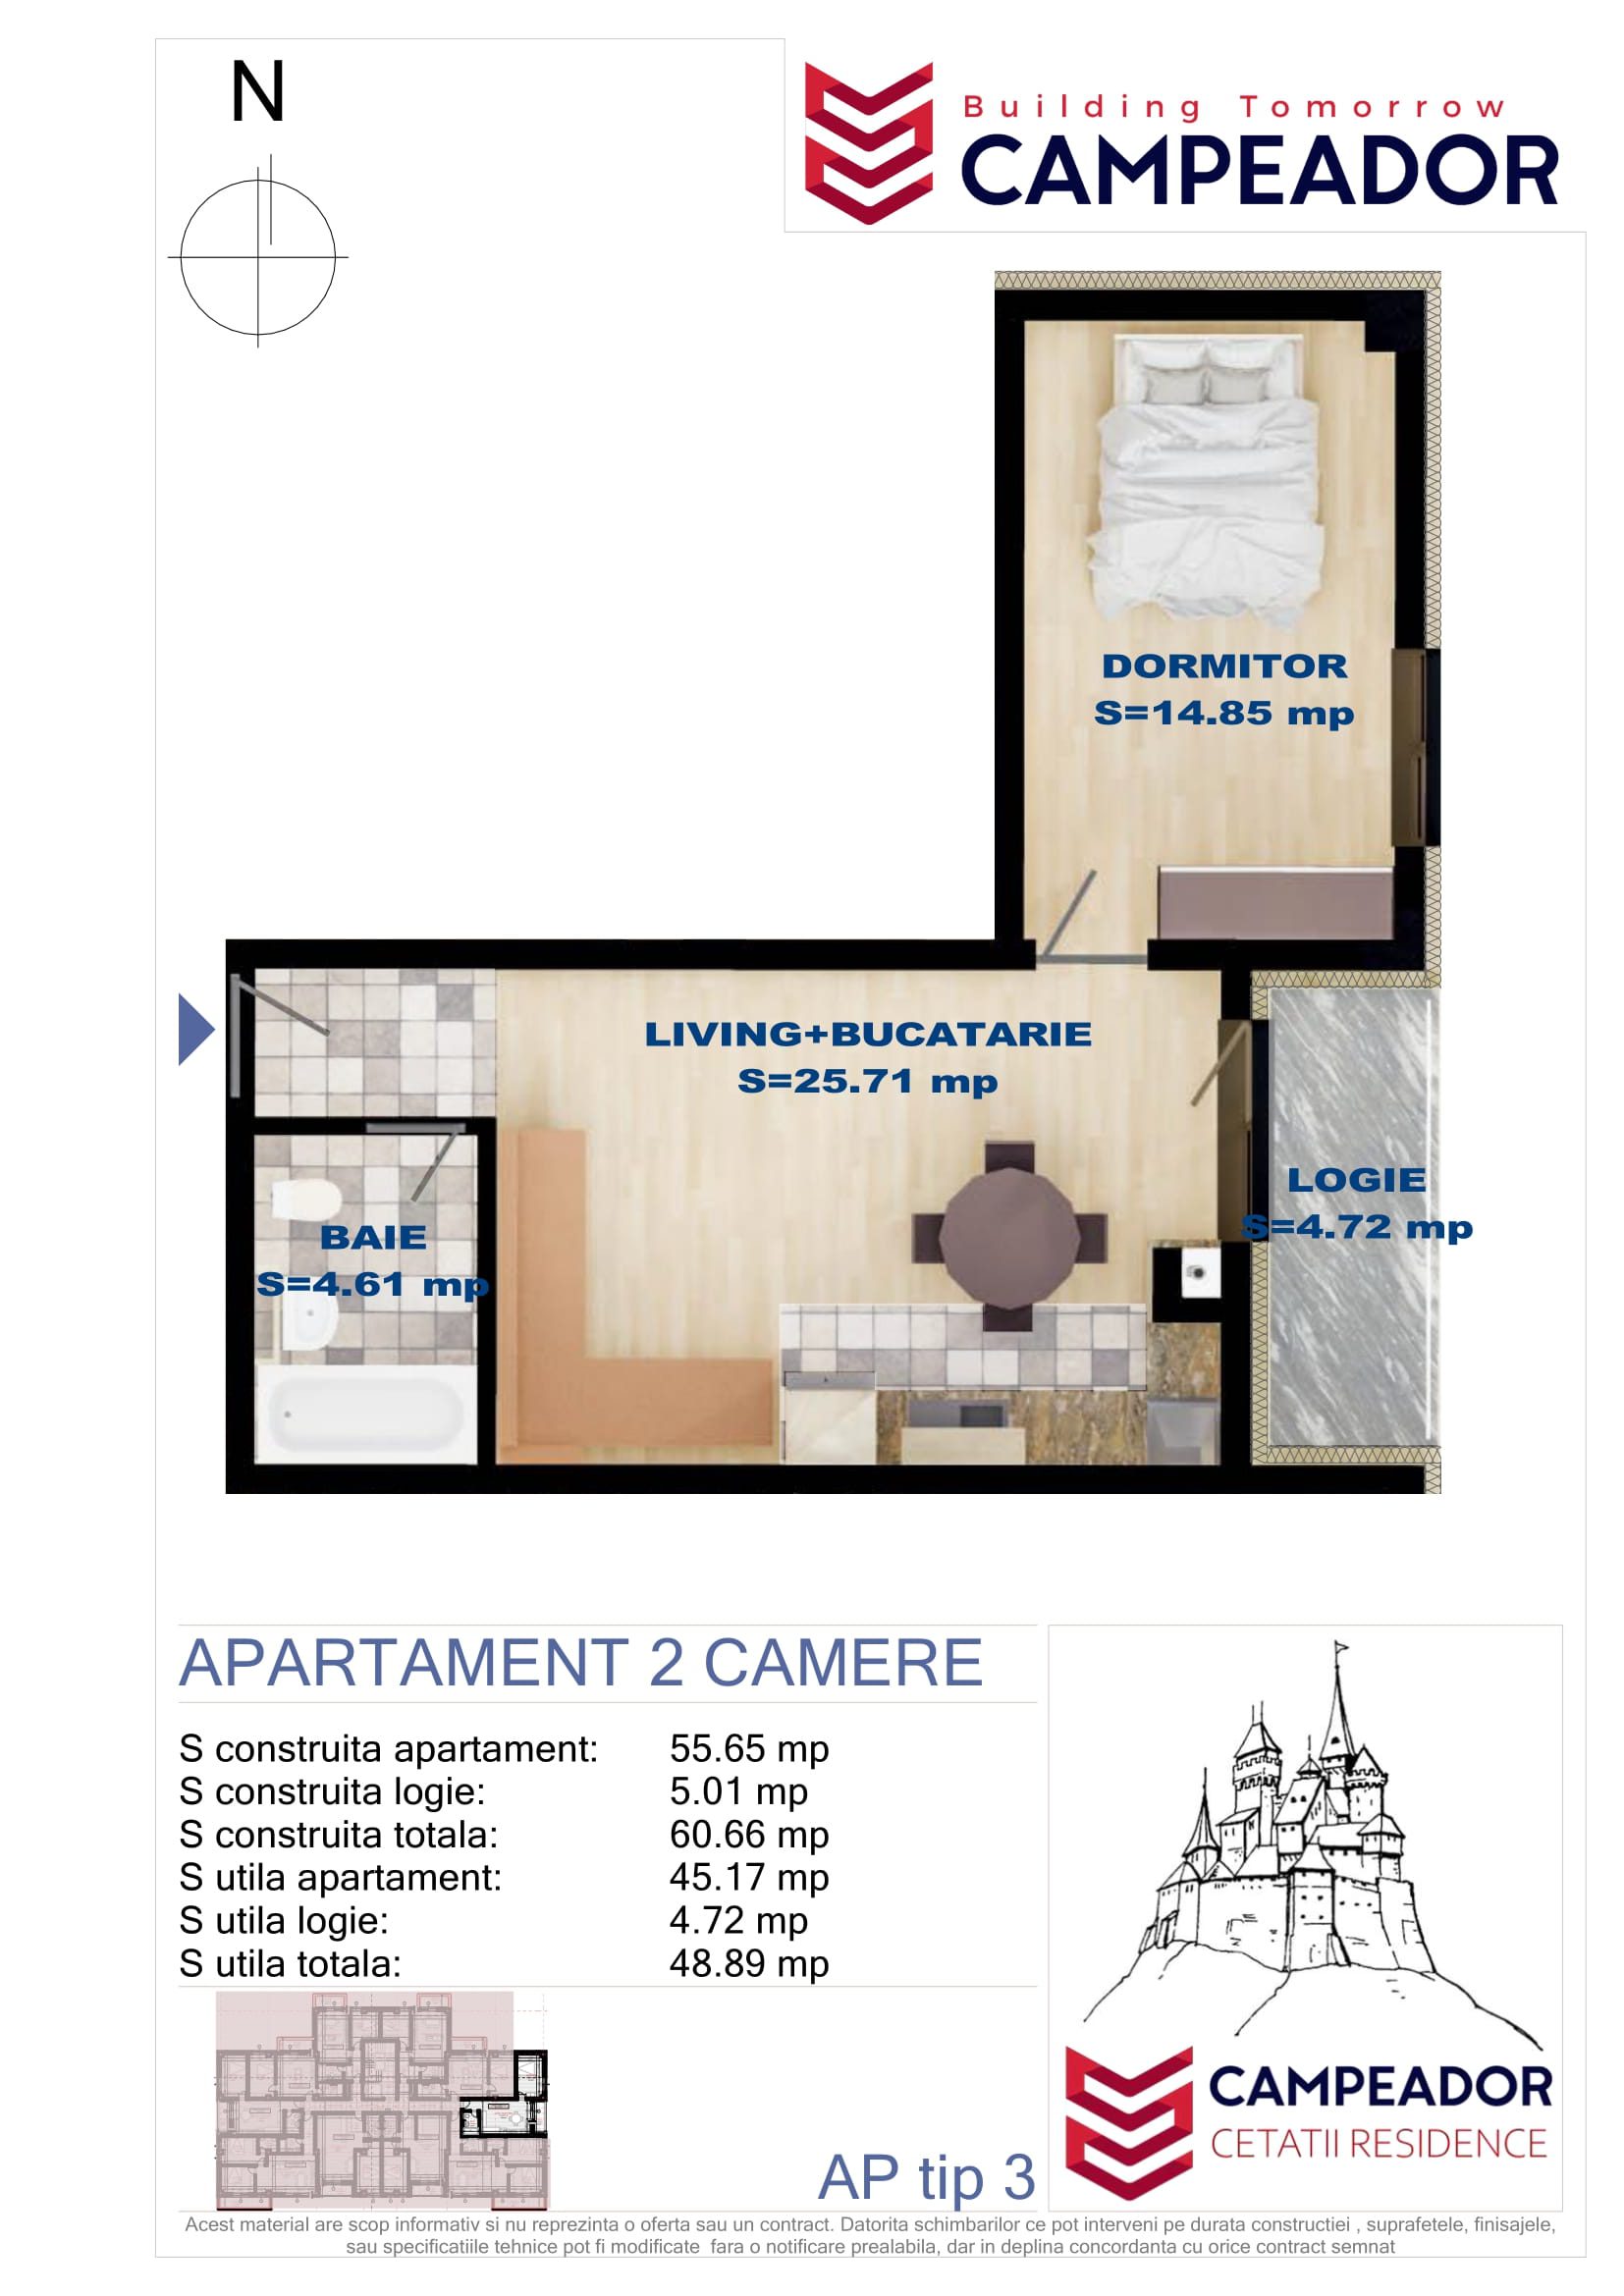 APARTAMENT TIP 3 - Campeador Cetatii Residence